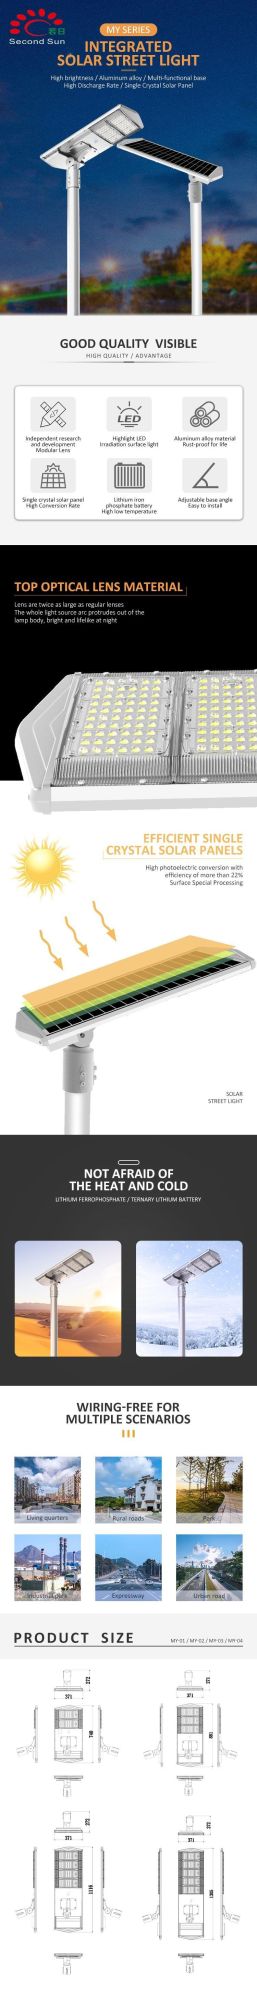 All in One Die-Cast Aluminum Solar Outdoor 120 Watt LED High Quality for Road Solar Street Light